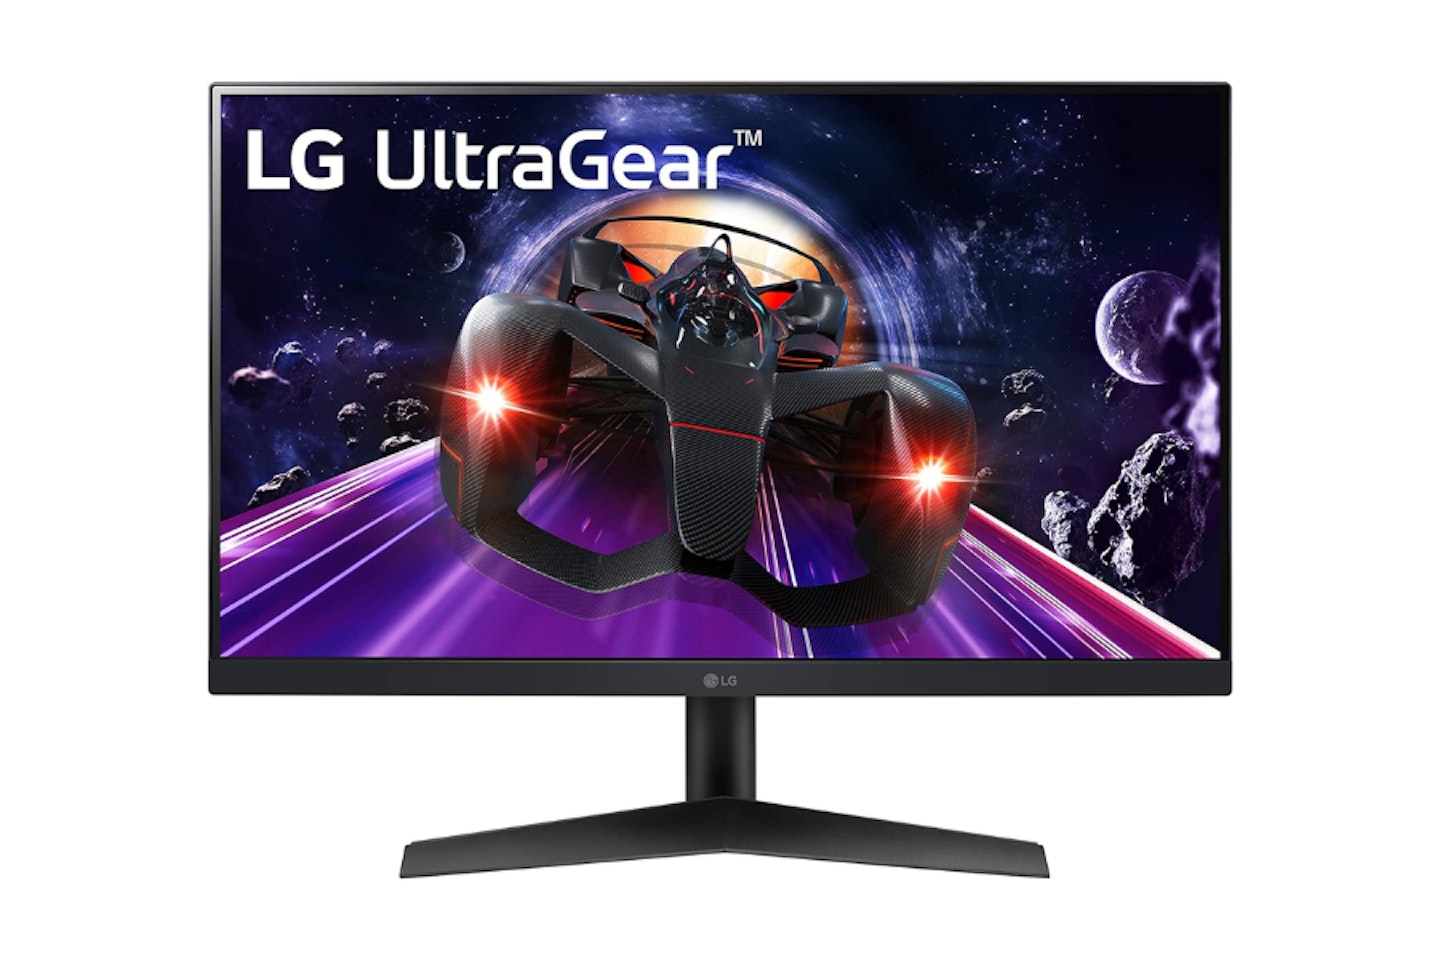  LG UltraGear Monitor 24GN60R-B, 23.8-inch, IPS Display